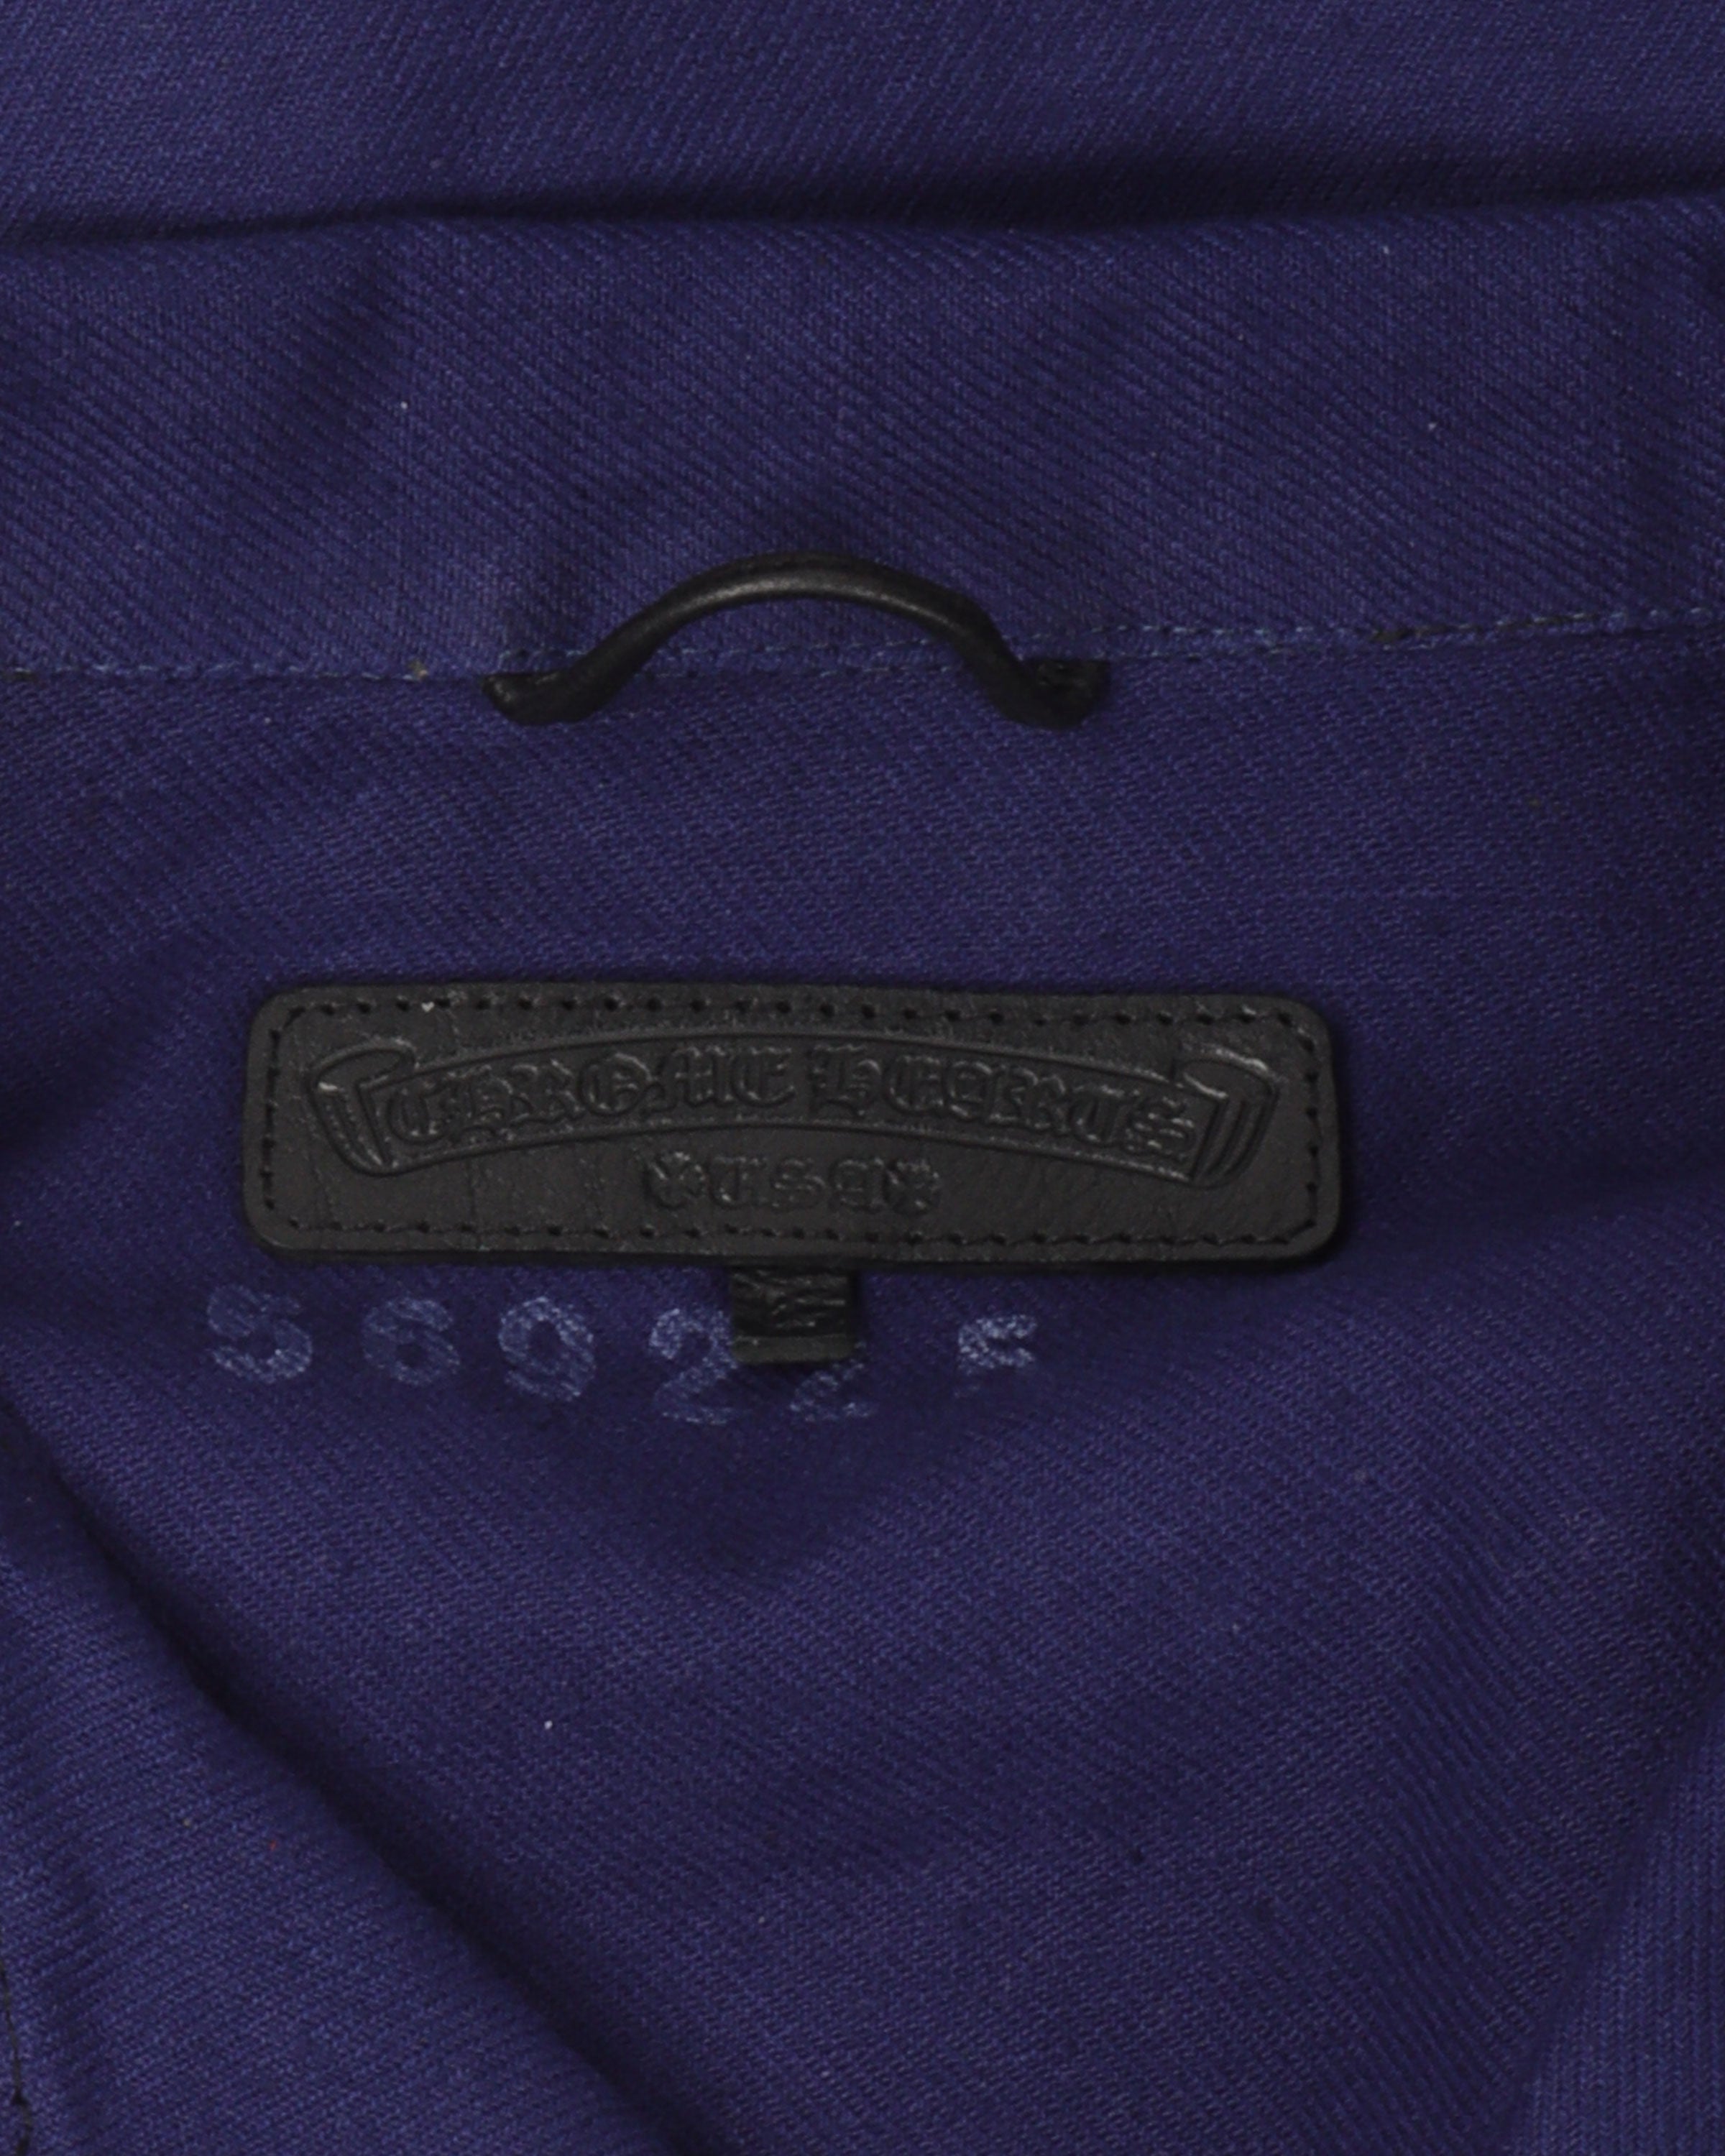 Cross Patch Bleu de Travail French Work Jacket